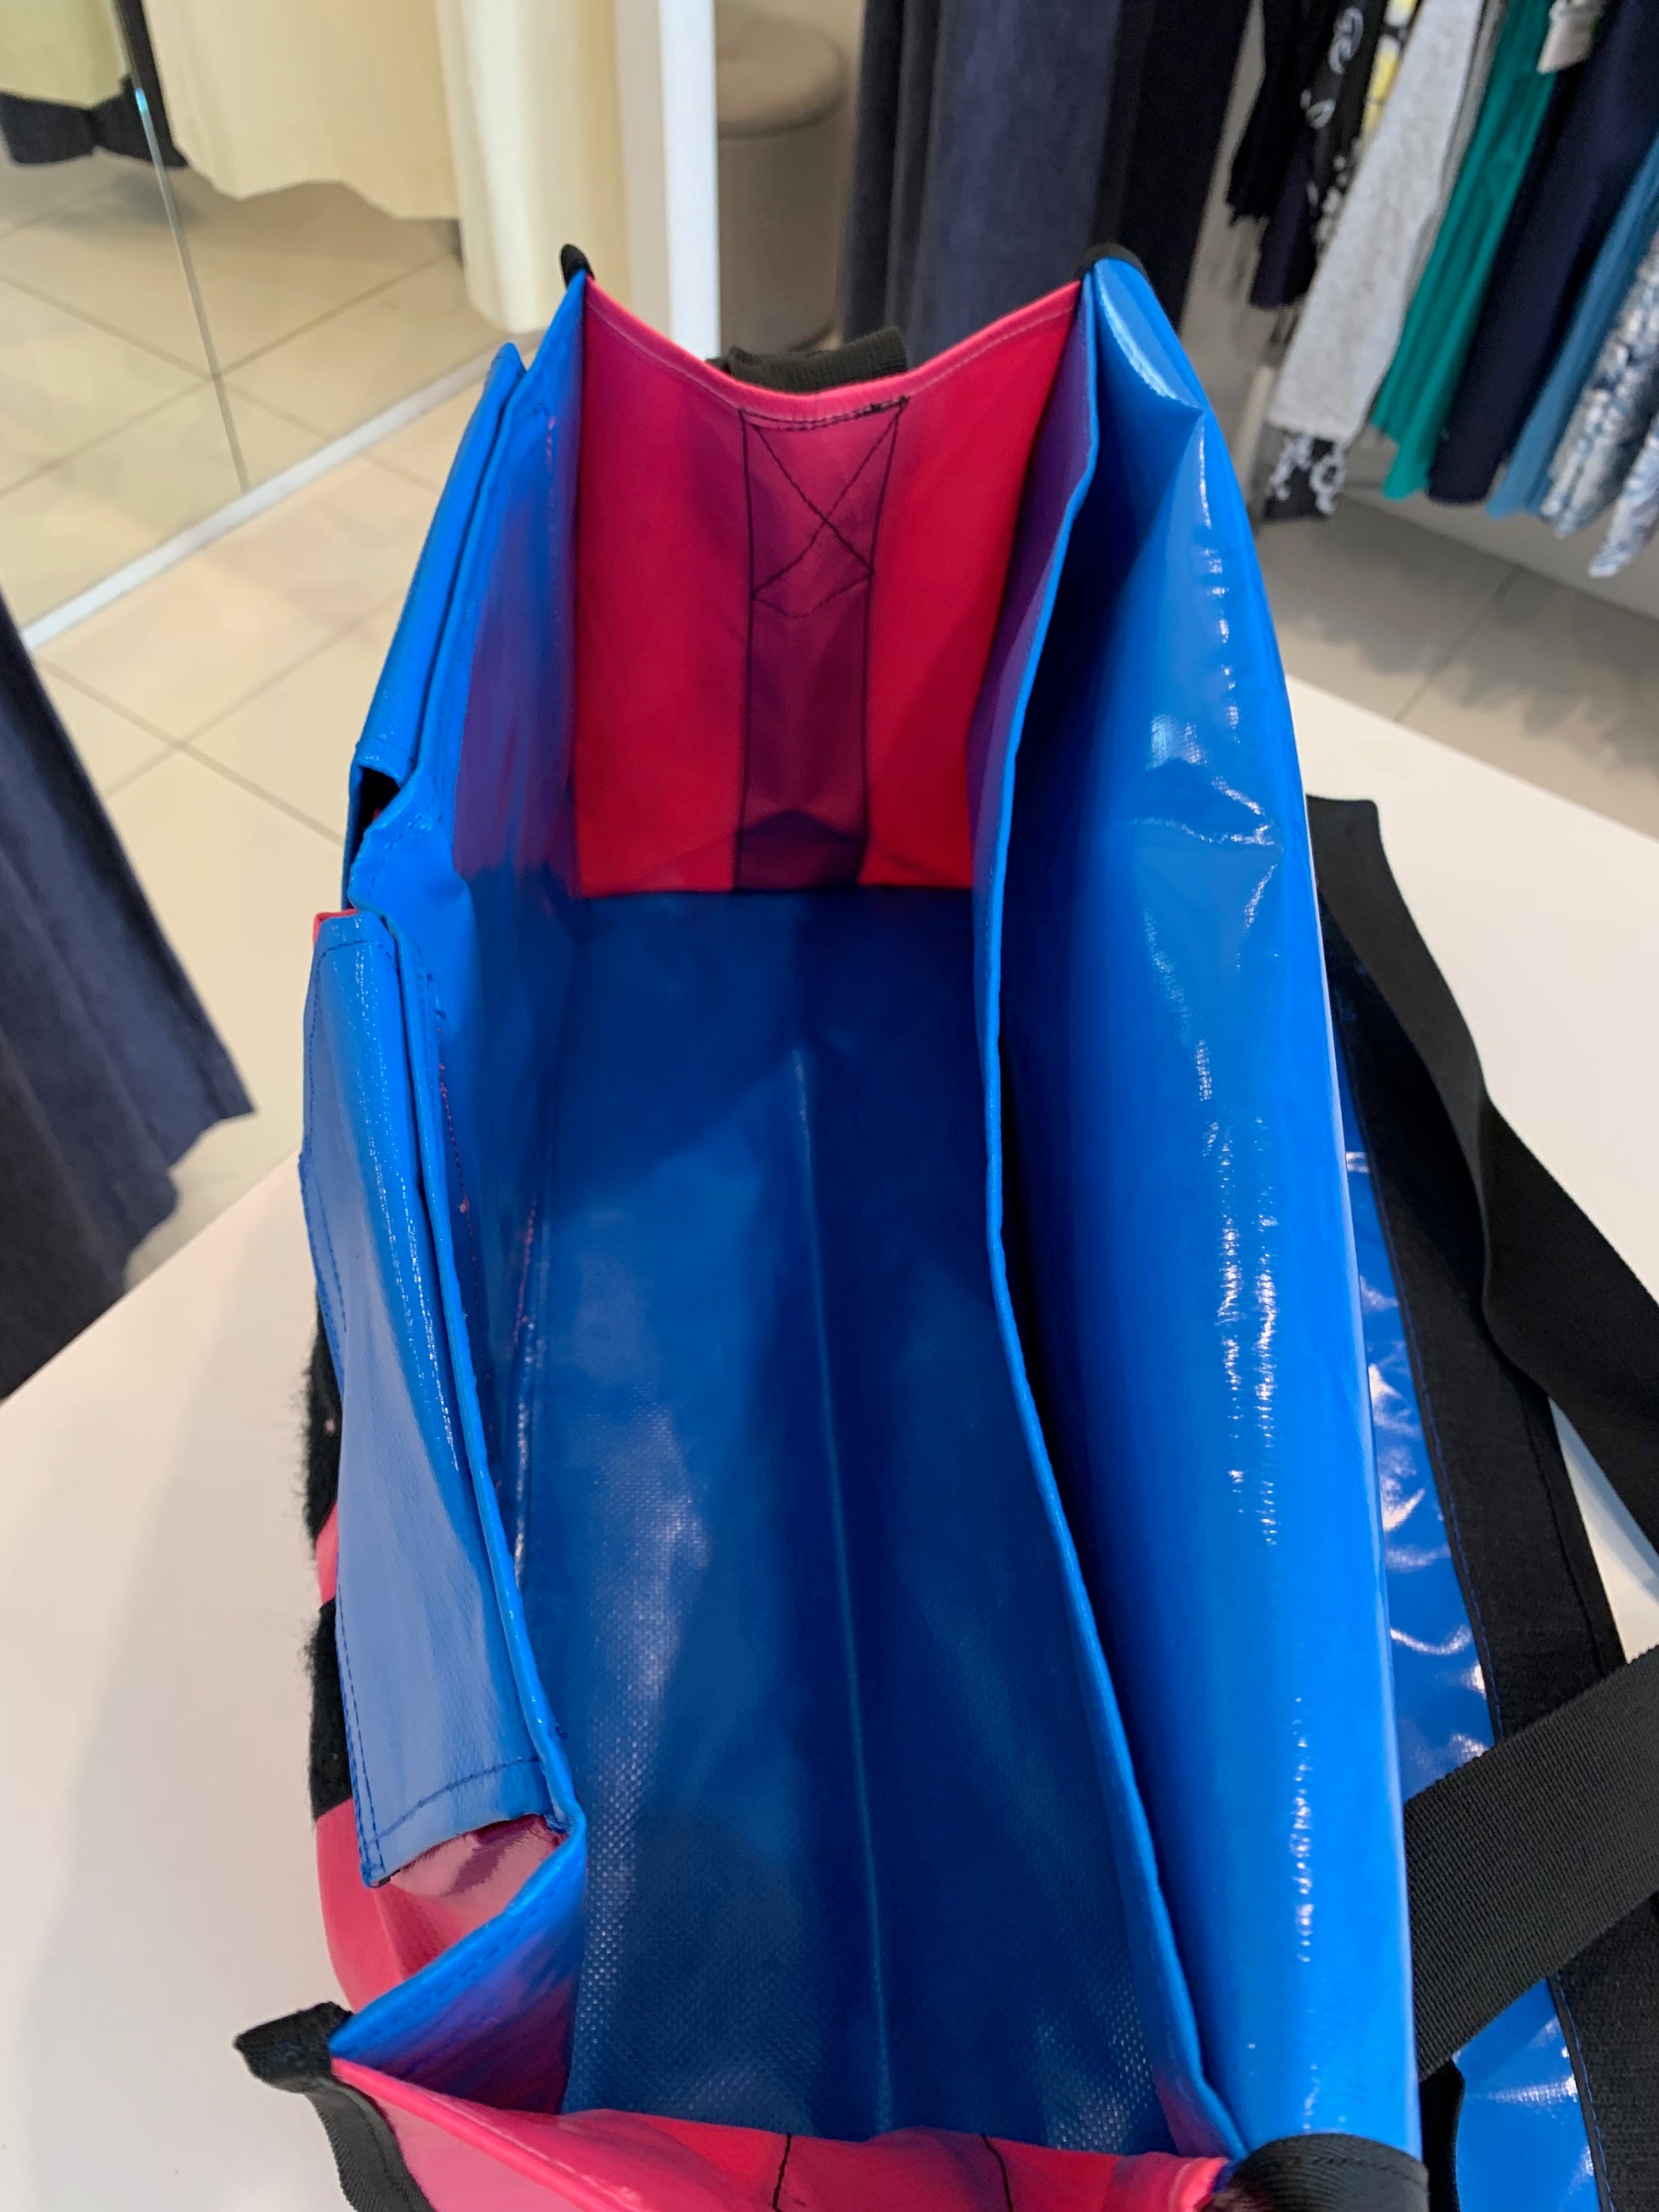 CribBags Medium Blue and Pink Crib bag. Tough Vinyl Construct 2 pockets outside, Document pockets inside